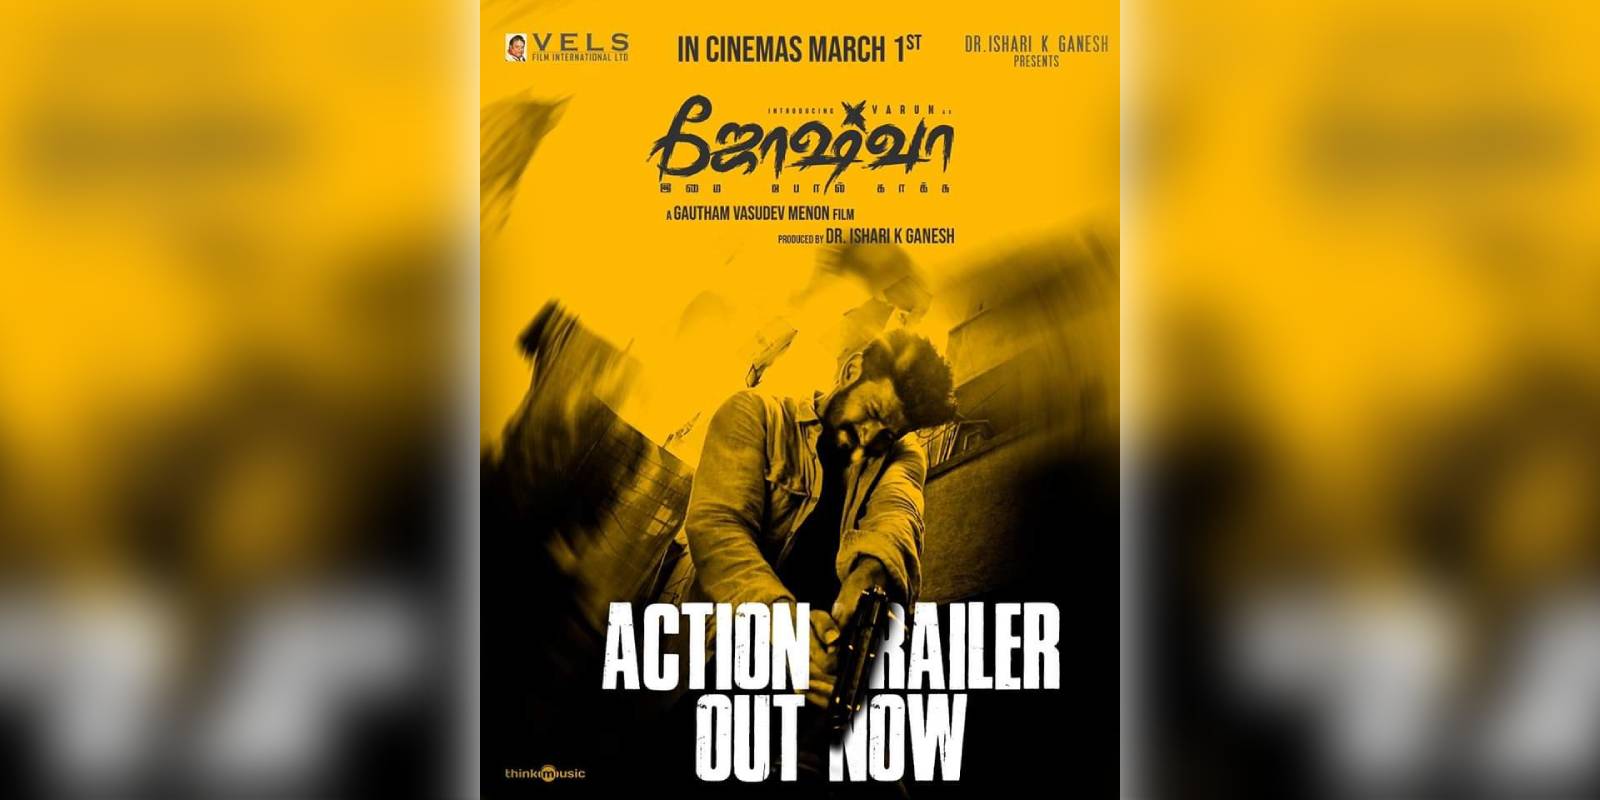 Trailer of Gautam Menon’s ‘Joshua Imai Pol Kaakha’ launched